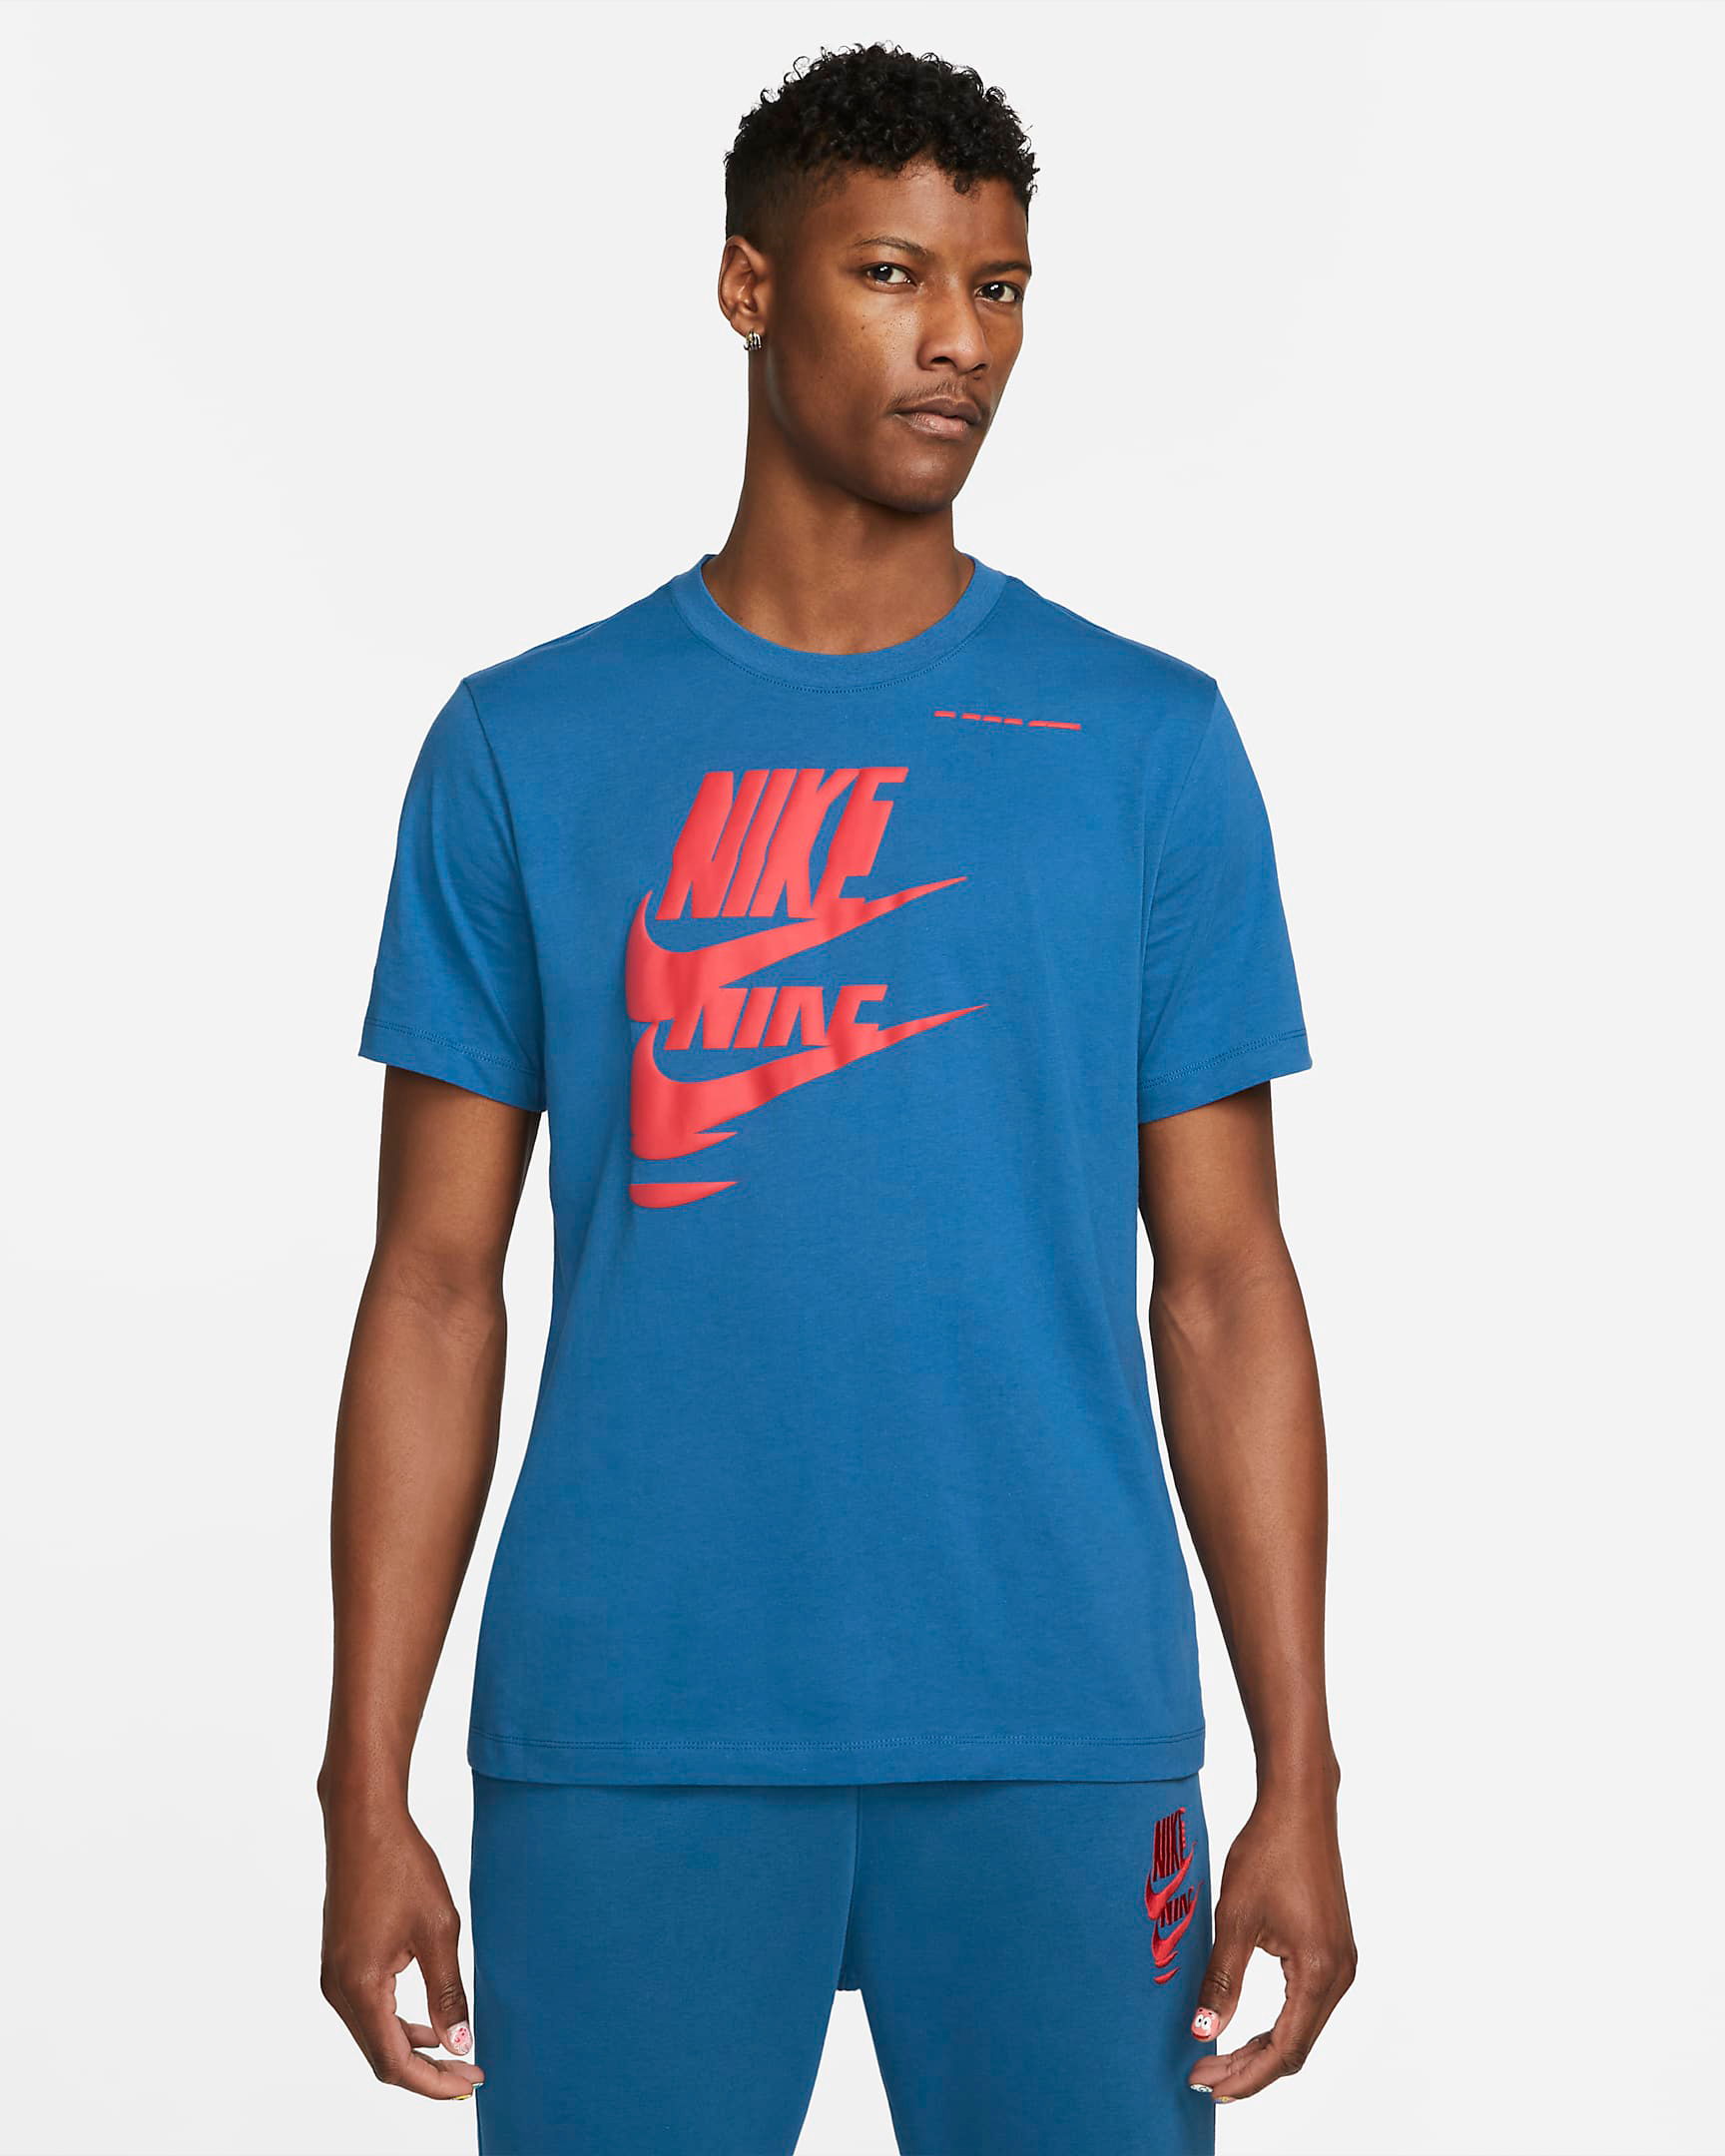 Nike Dunk Low Dark Marina Blue Shirts Clothing Outfits